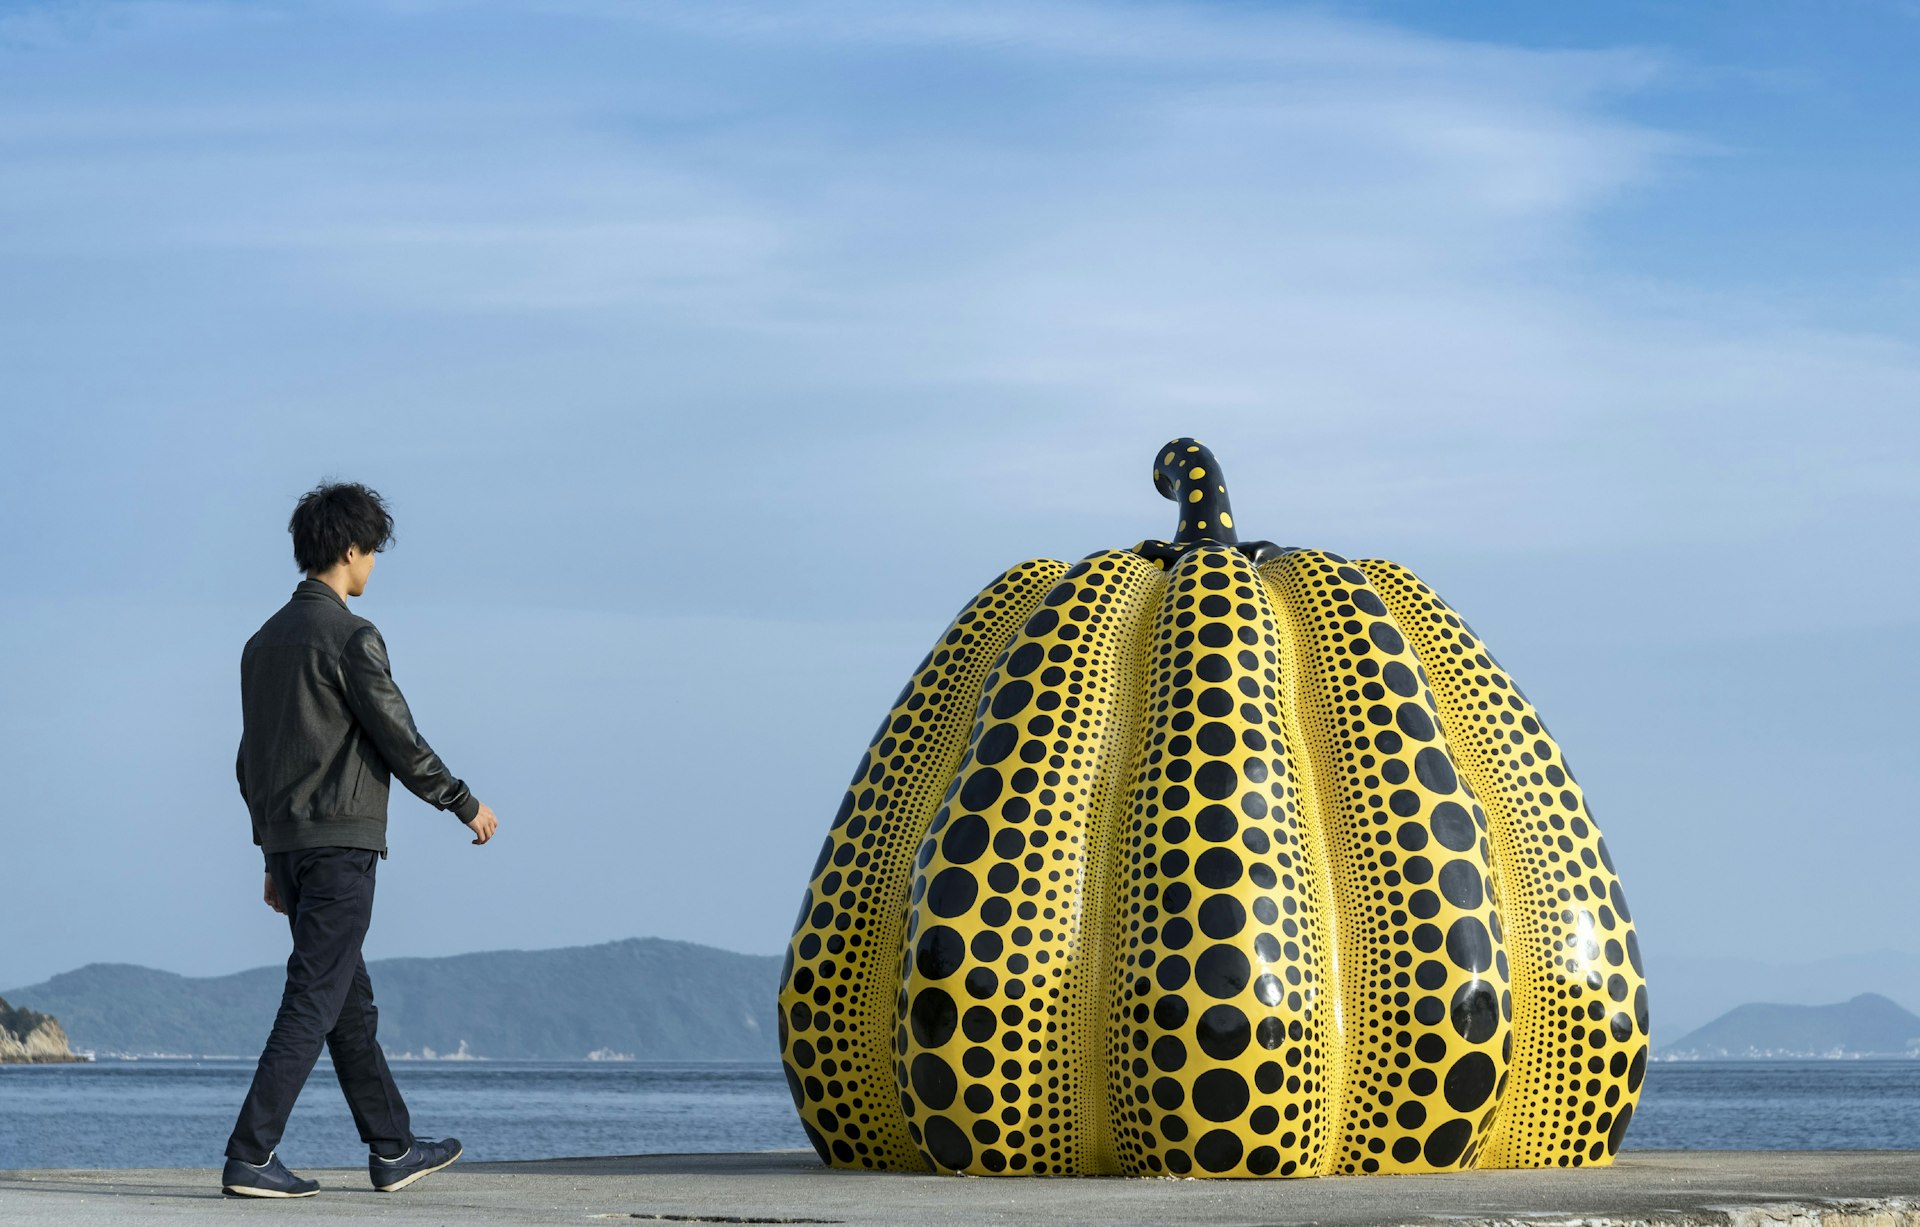 A Japanese tourist approaching Kusama's yellow "Pumpkin" on a pier in Naoshima